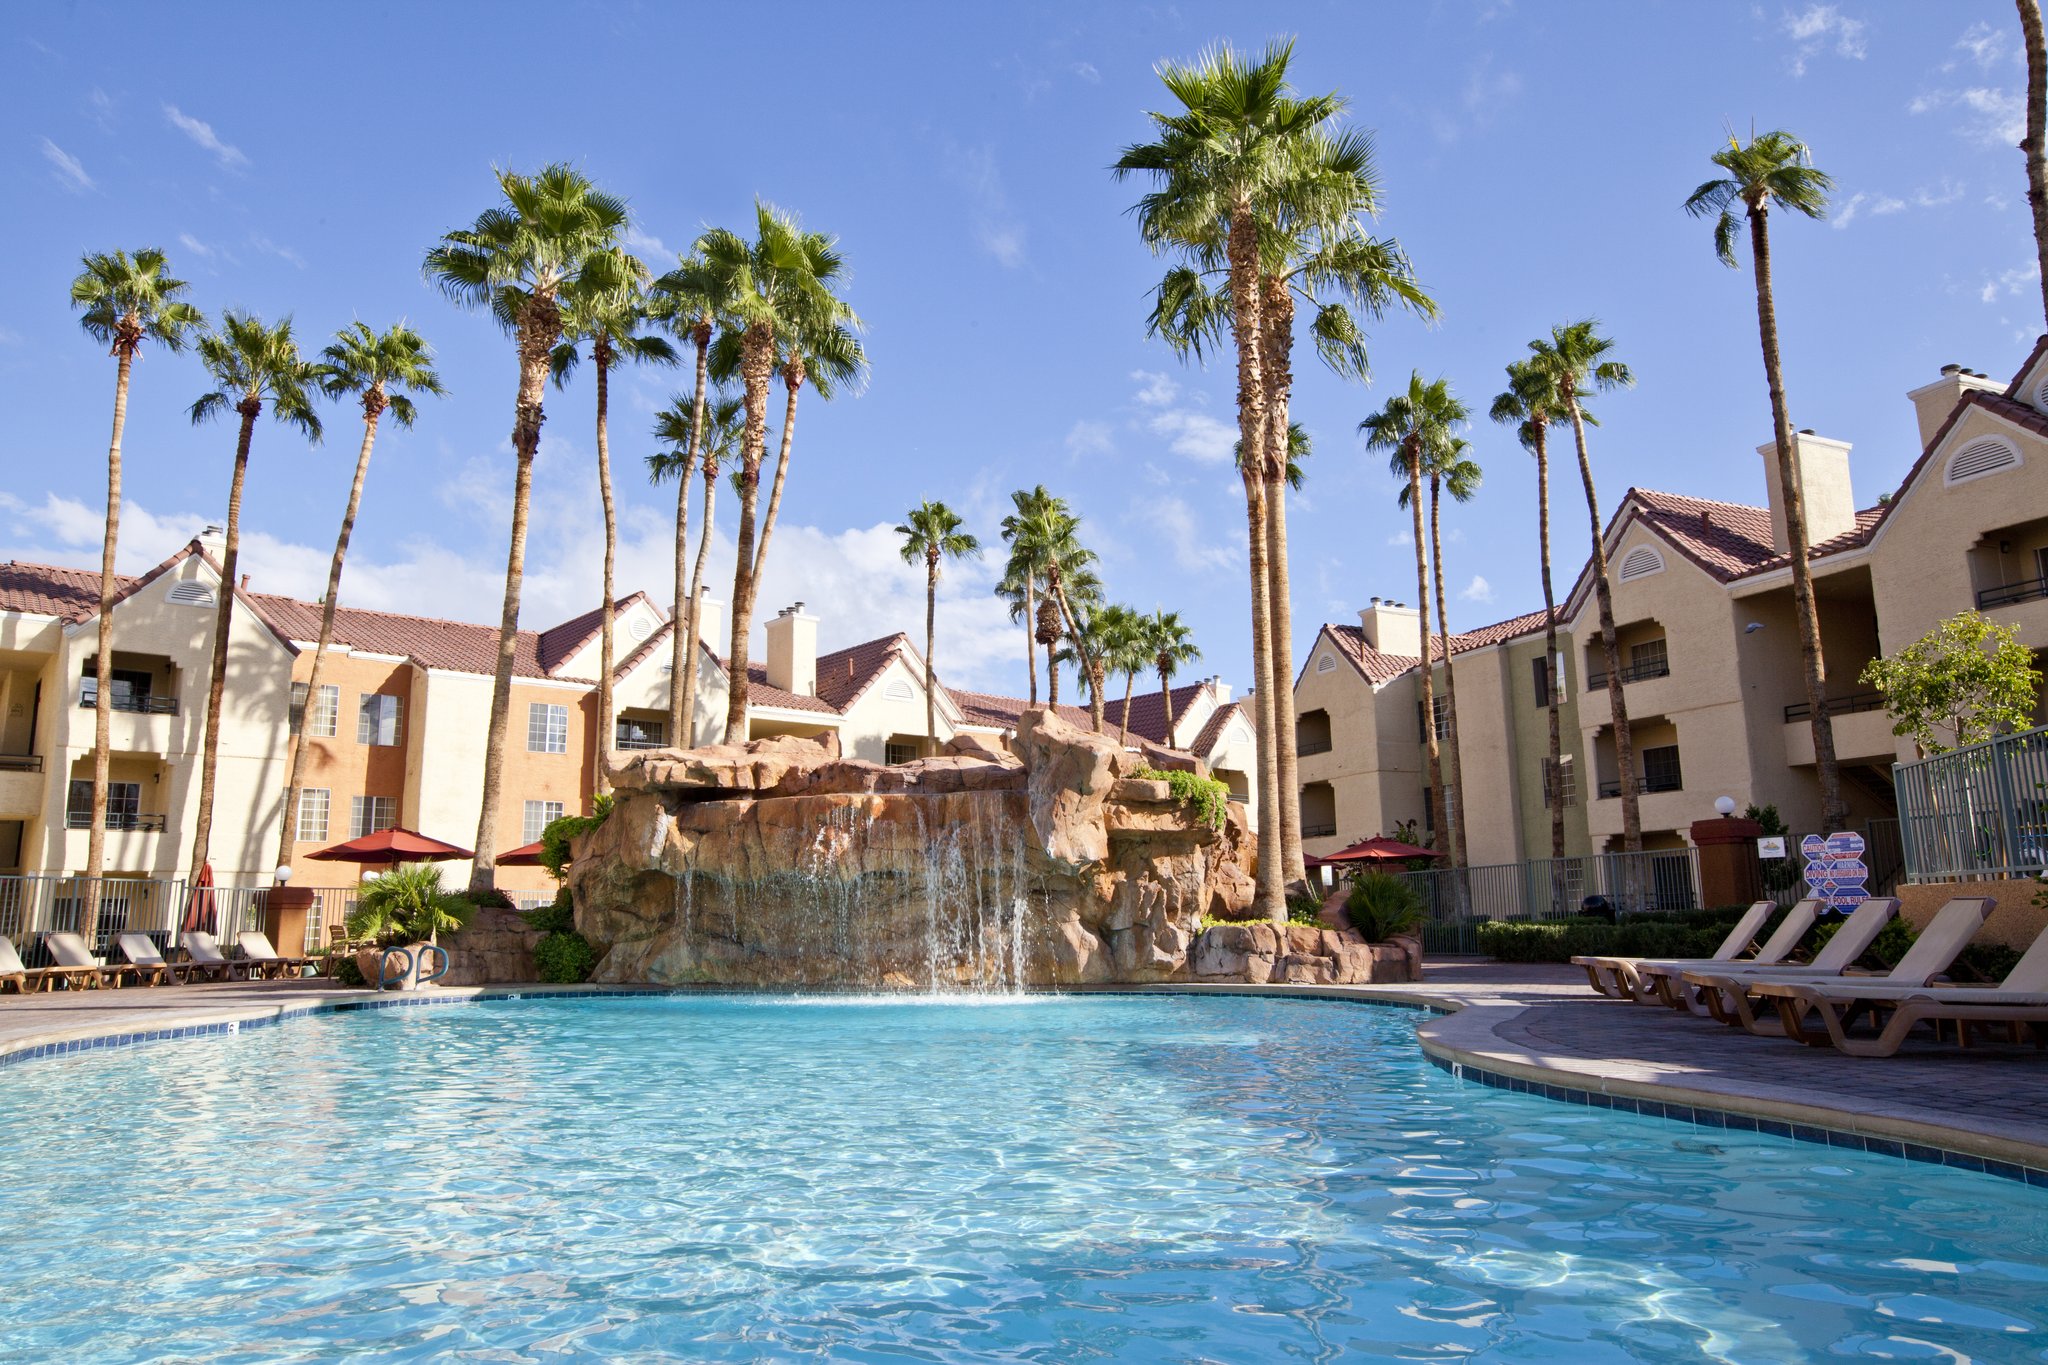 Holiday Inn Club Vacations Las Vegas - Desert Club Resort